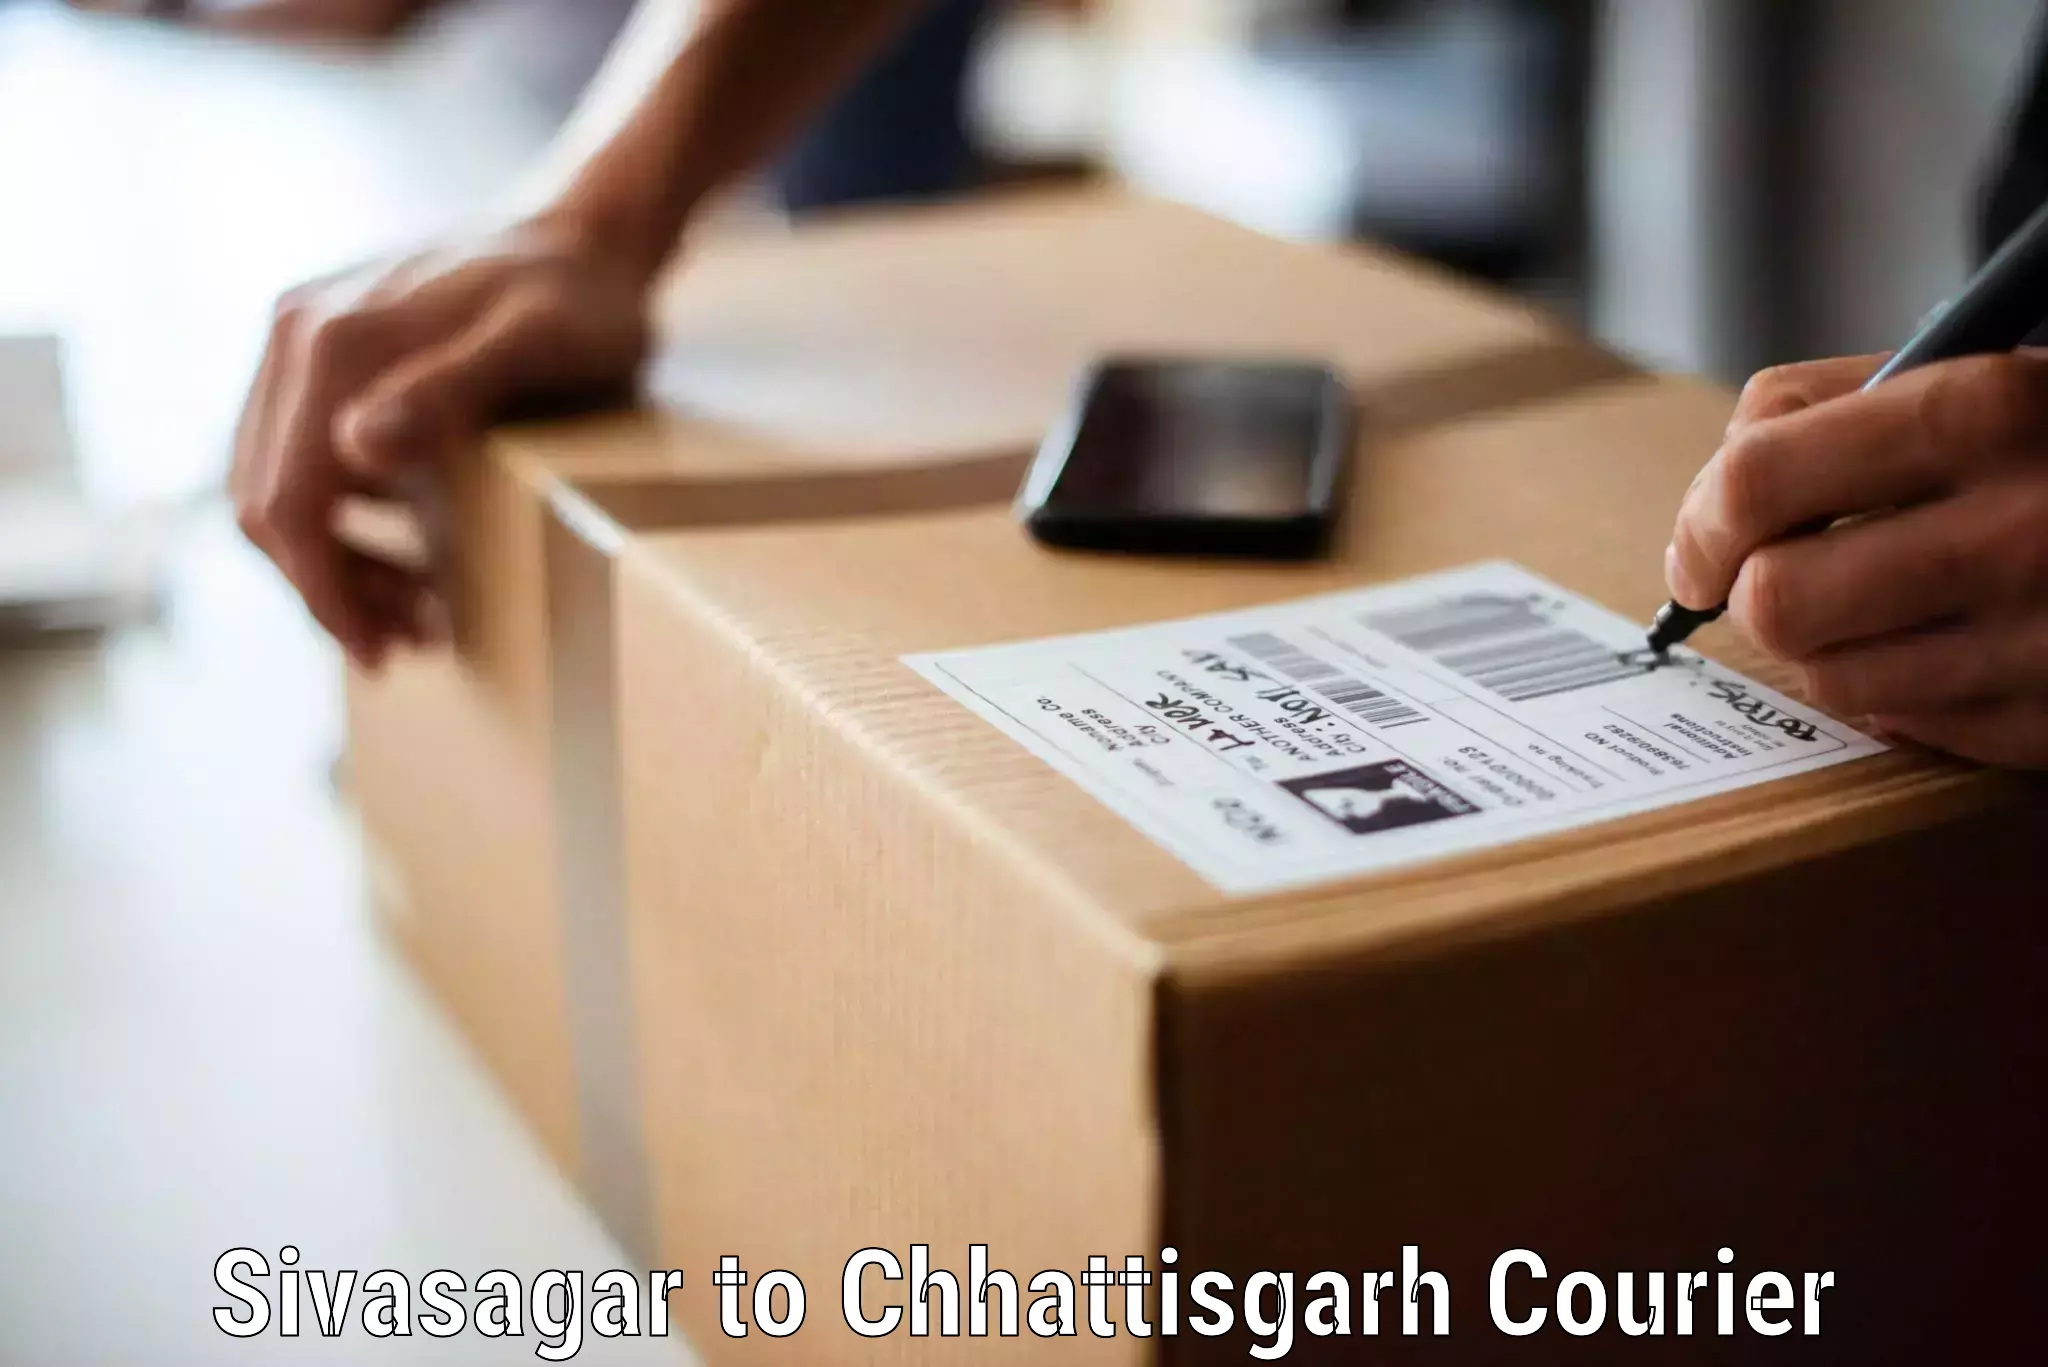 Furniture delivery service Sivasagar to Dhamtari